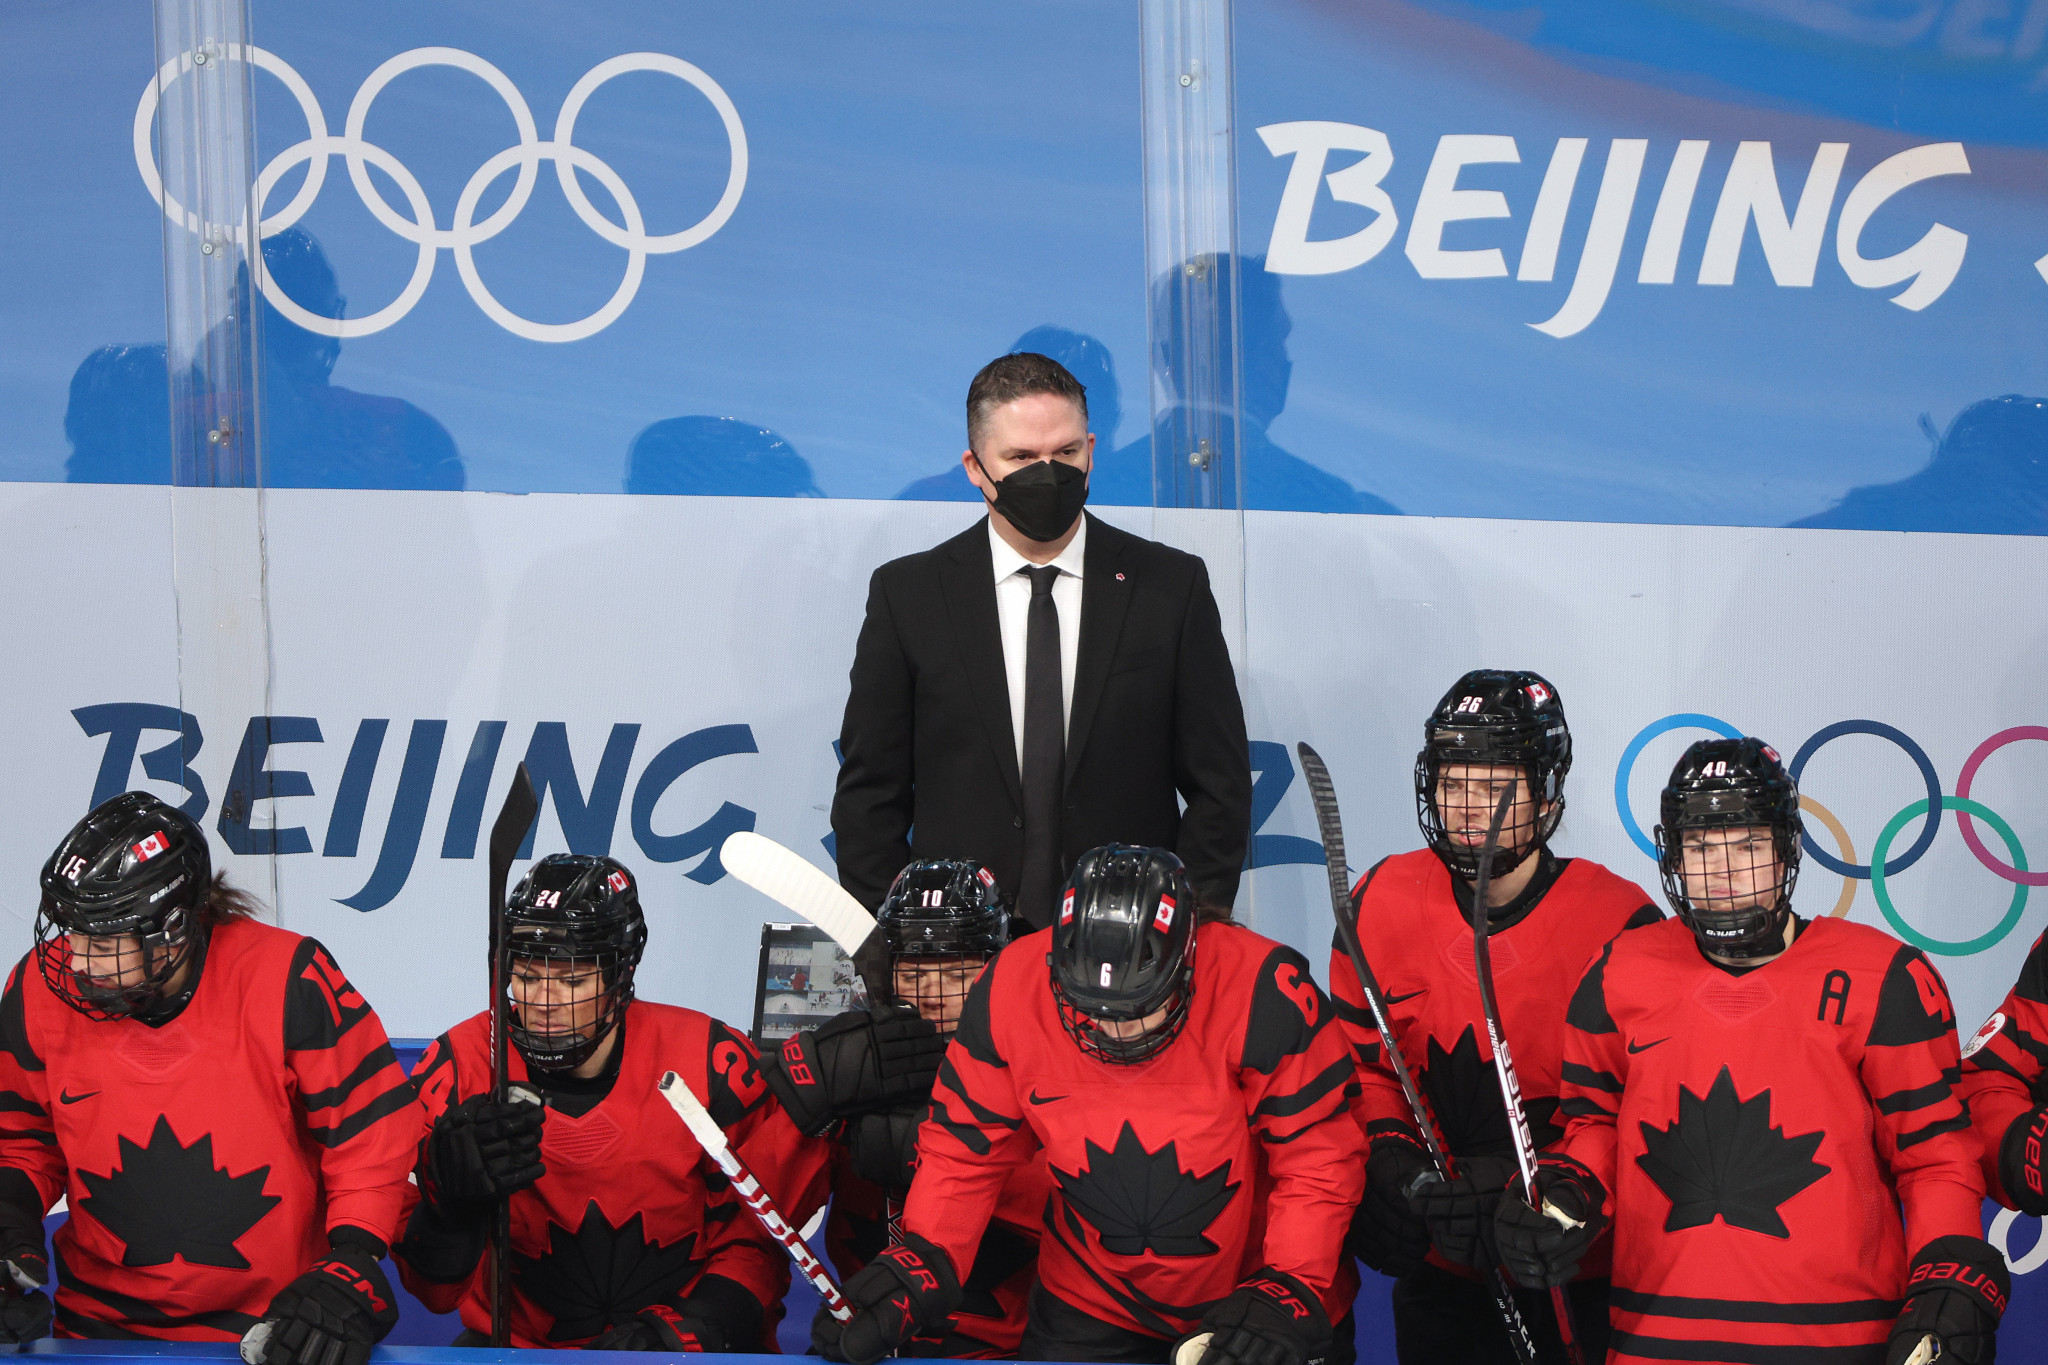 Ryan to coach Canadian women's ice hockey team until 2026 Winter Olympics